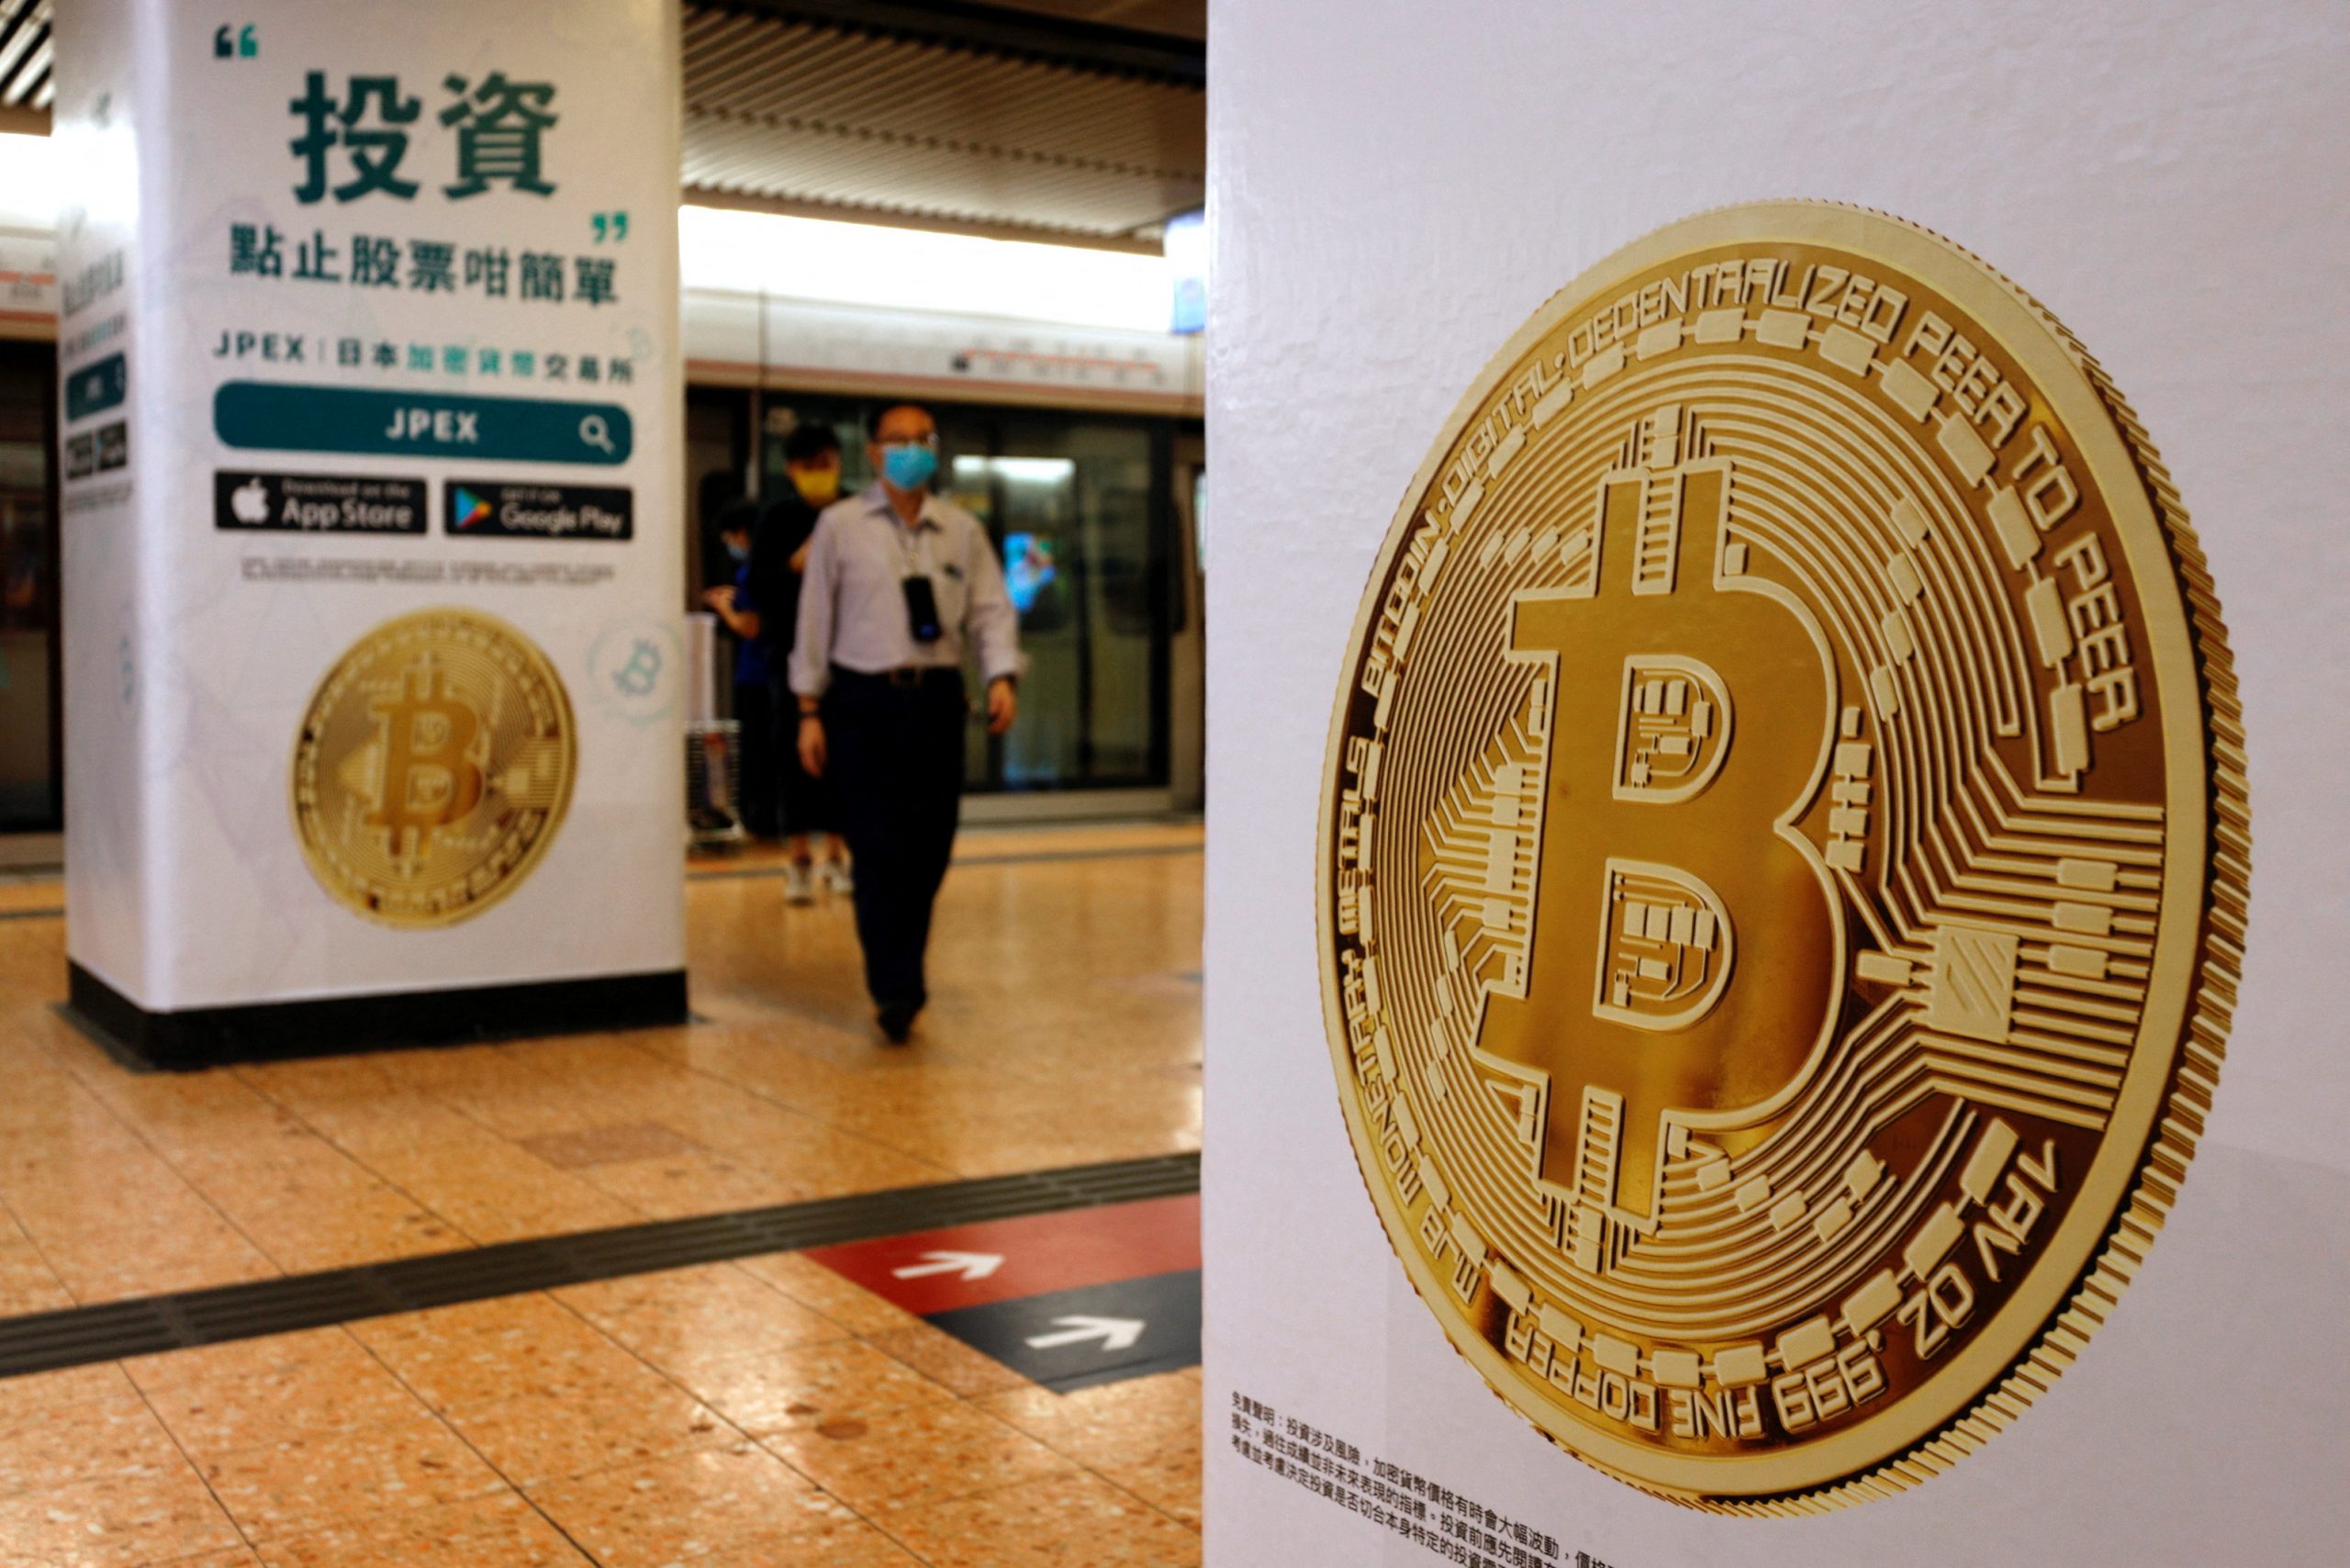 Hong Kong cryptocurrency news